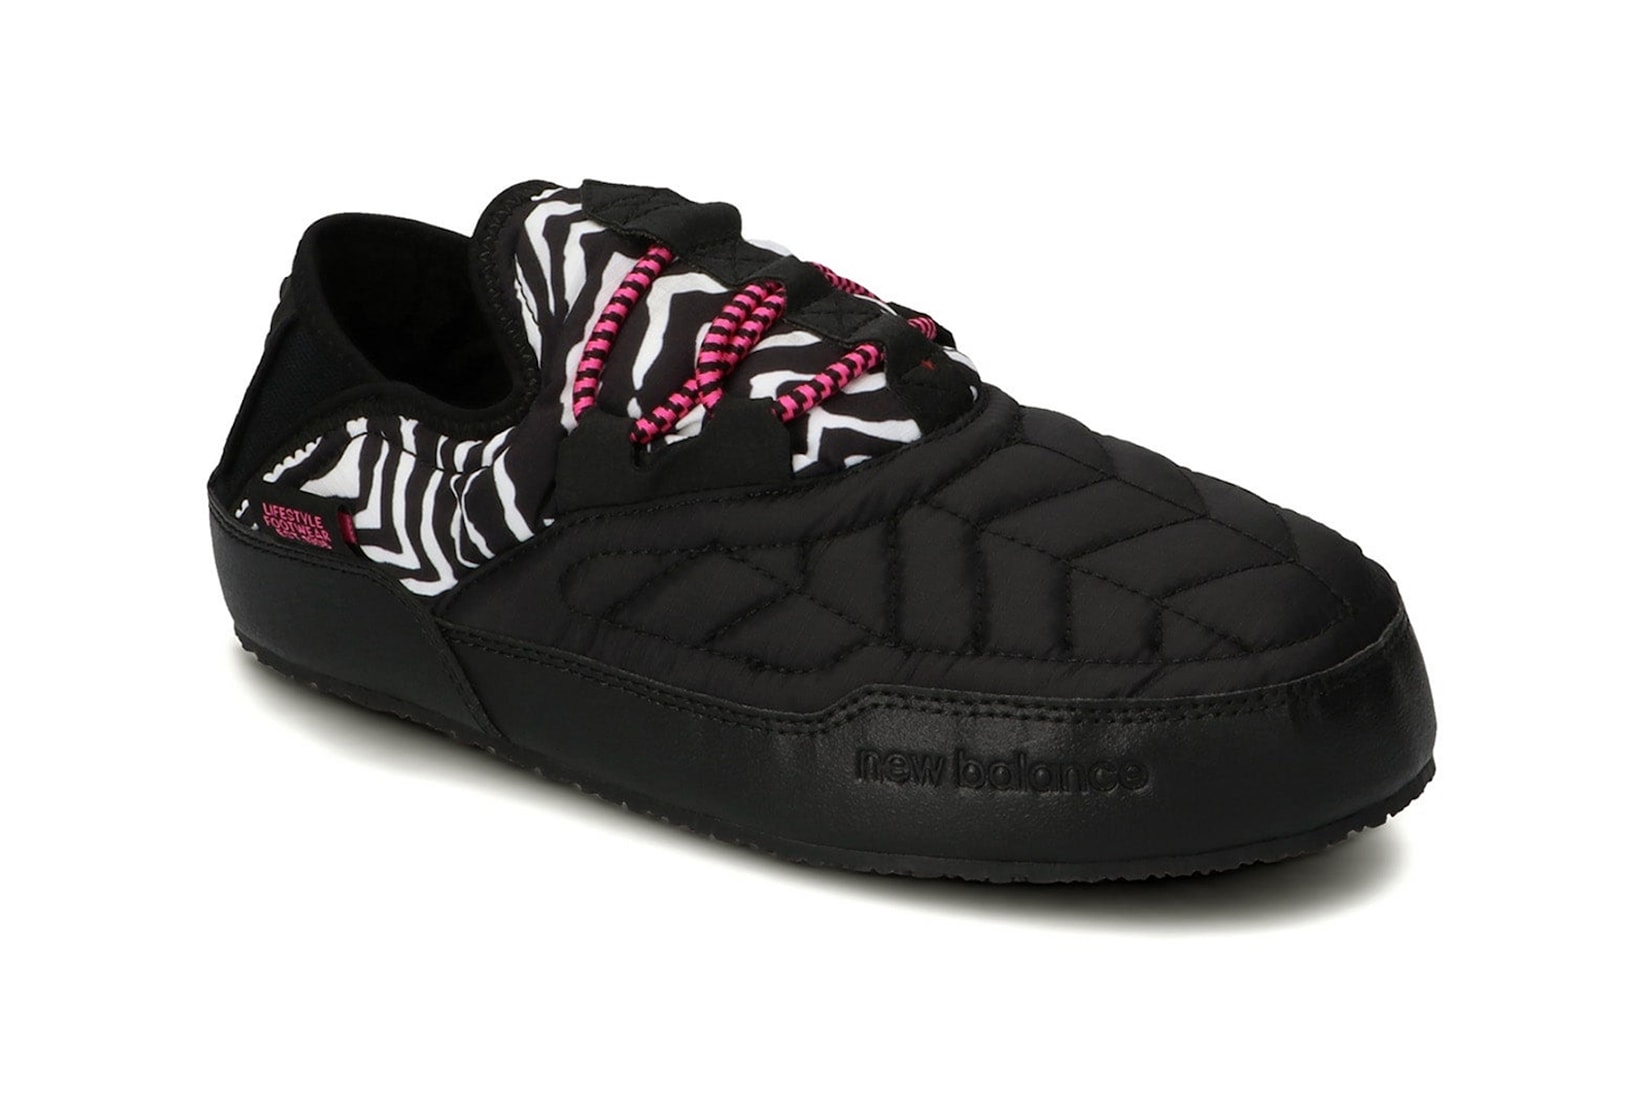 New Balance Caravan Moc Low Slip-Ons Slippers Camo Zebra Black Pink Footwear Shoes